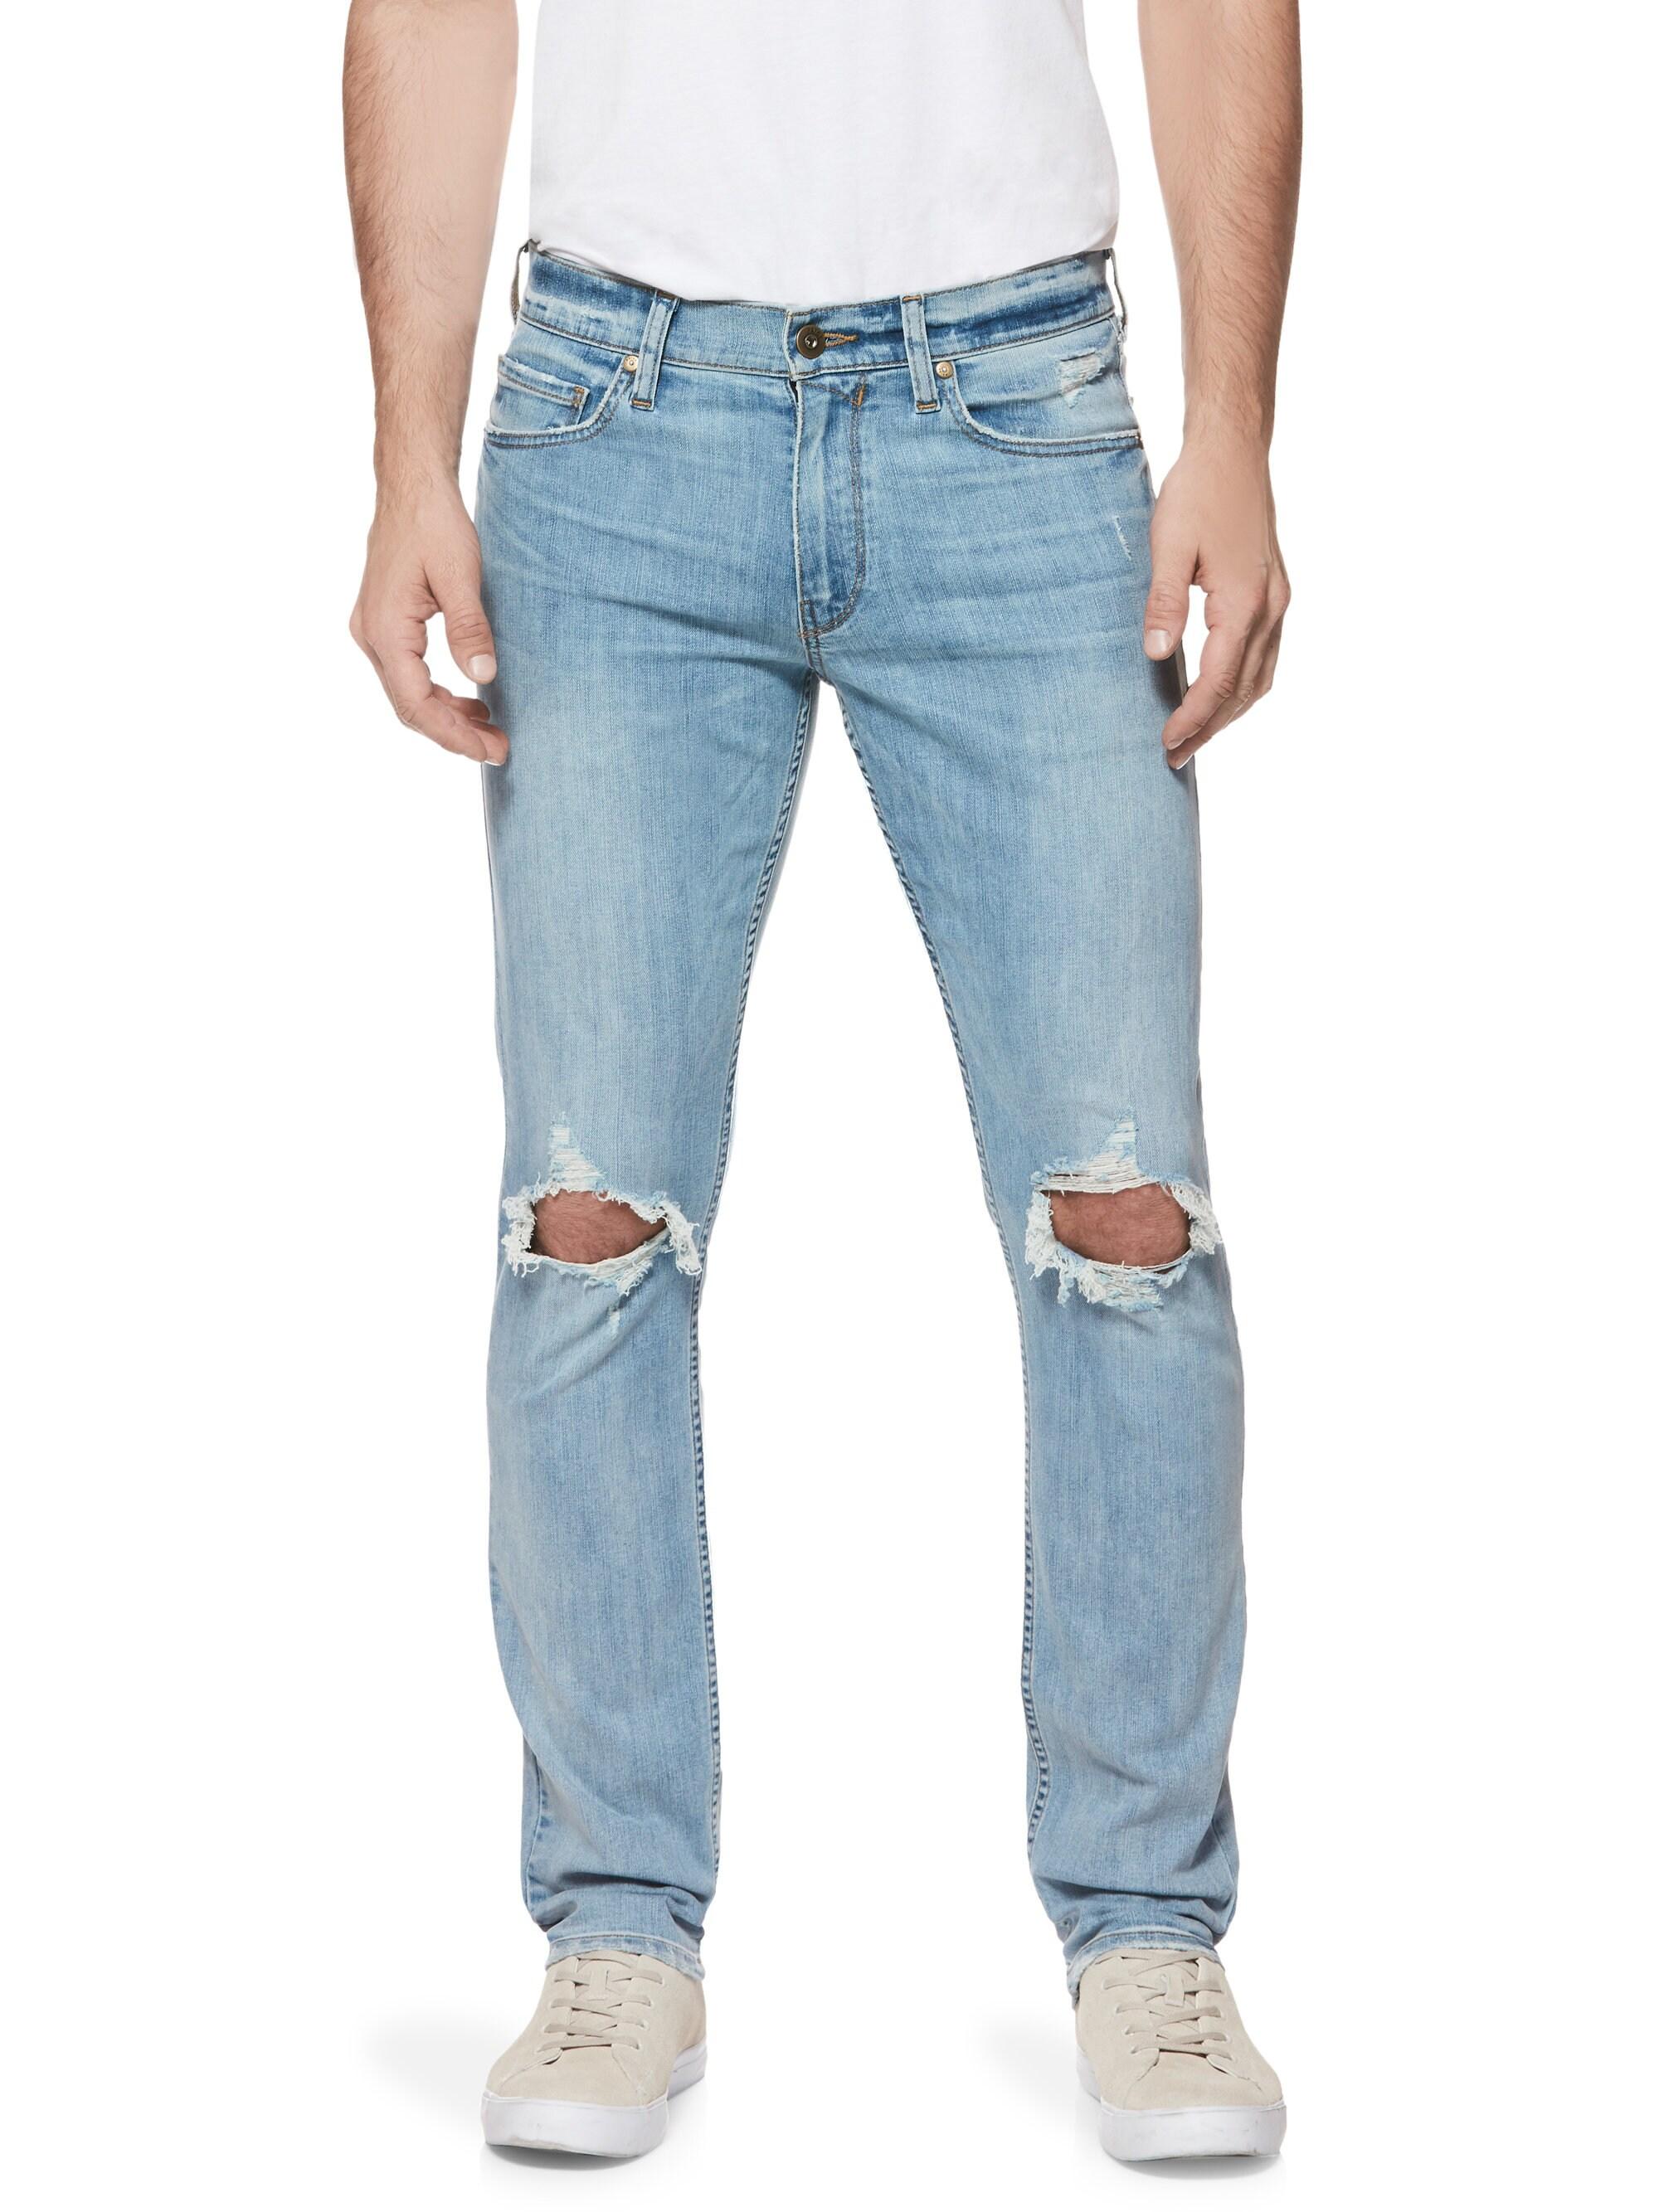 PAIGE Denim Lennox Modern Slim-fit Distressed Jeans in Blue for Men - Lyst